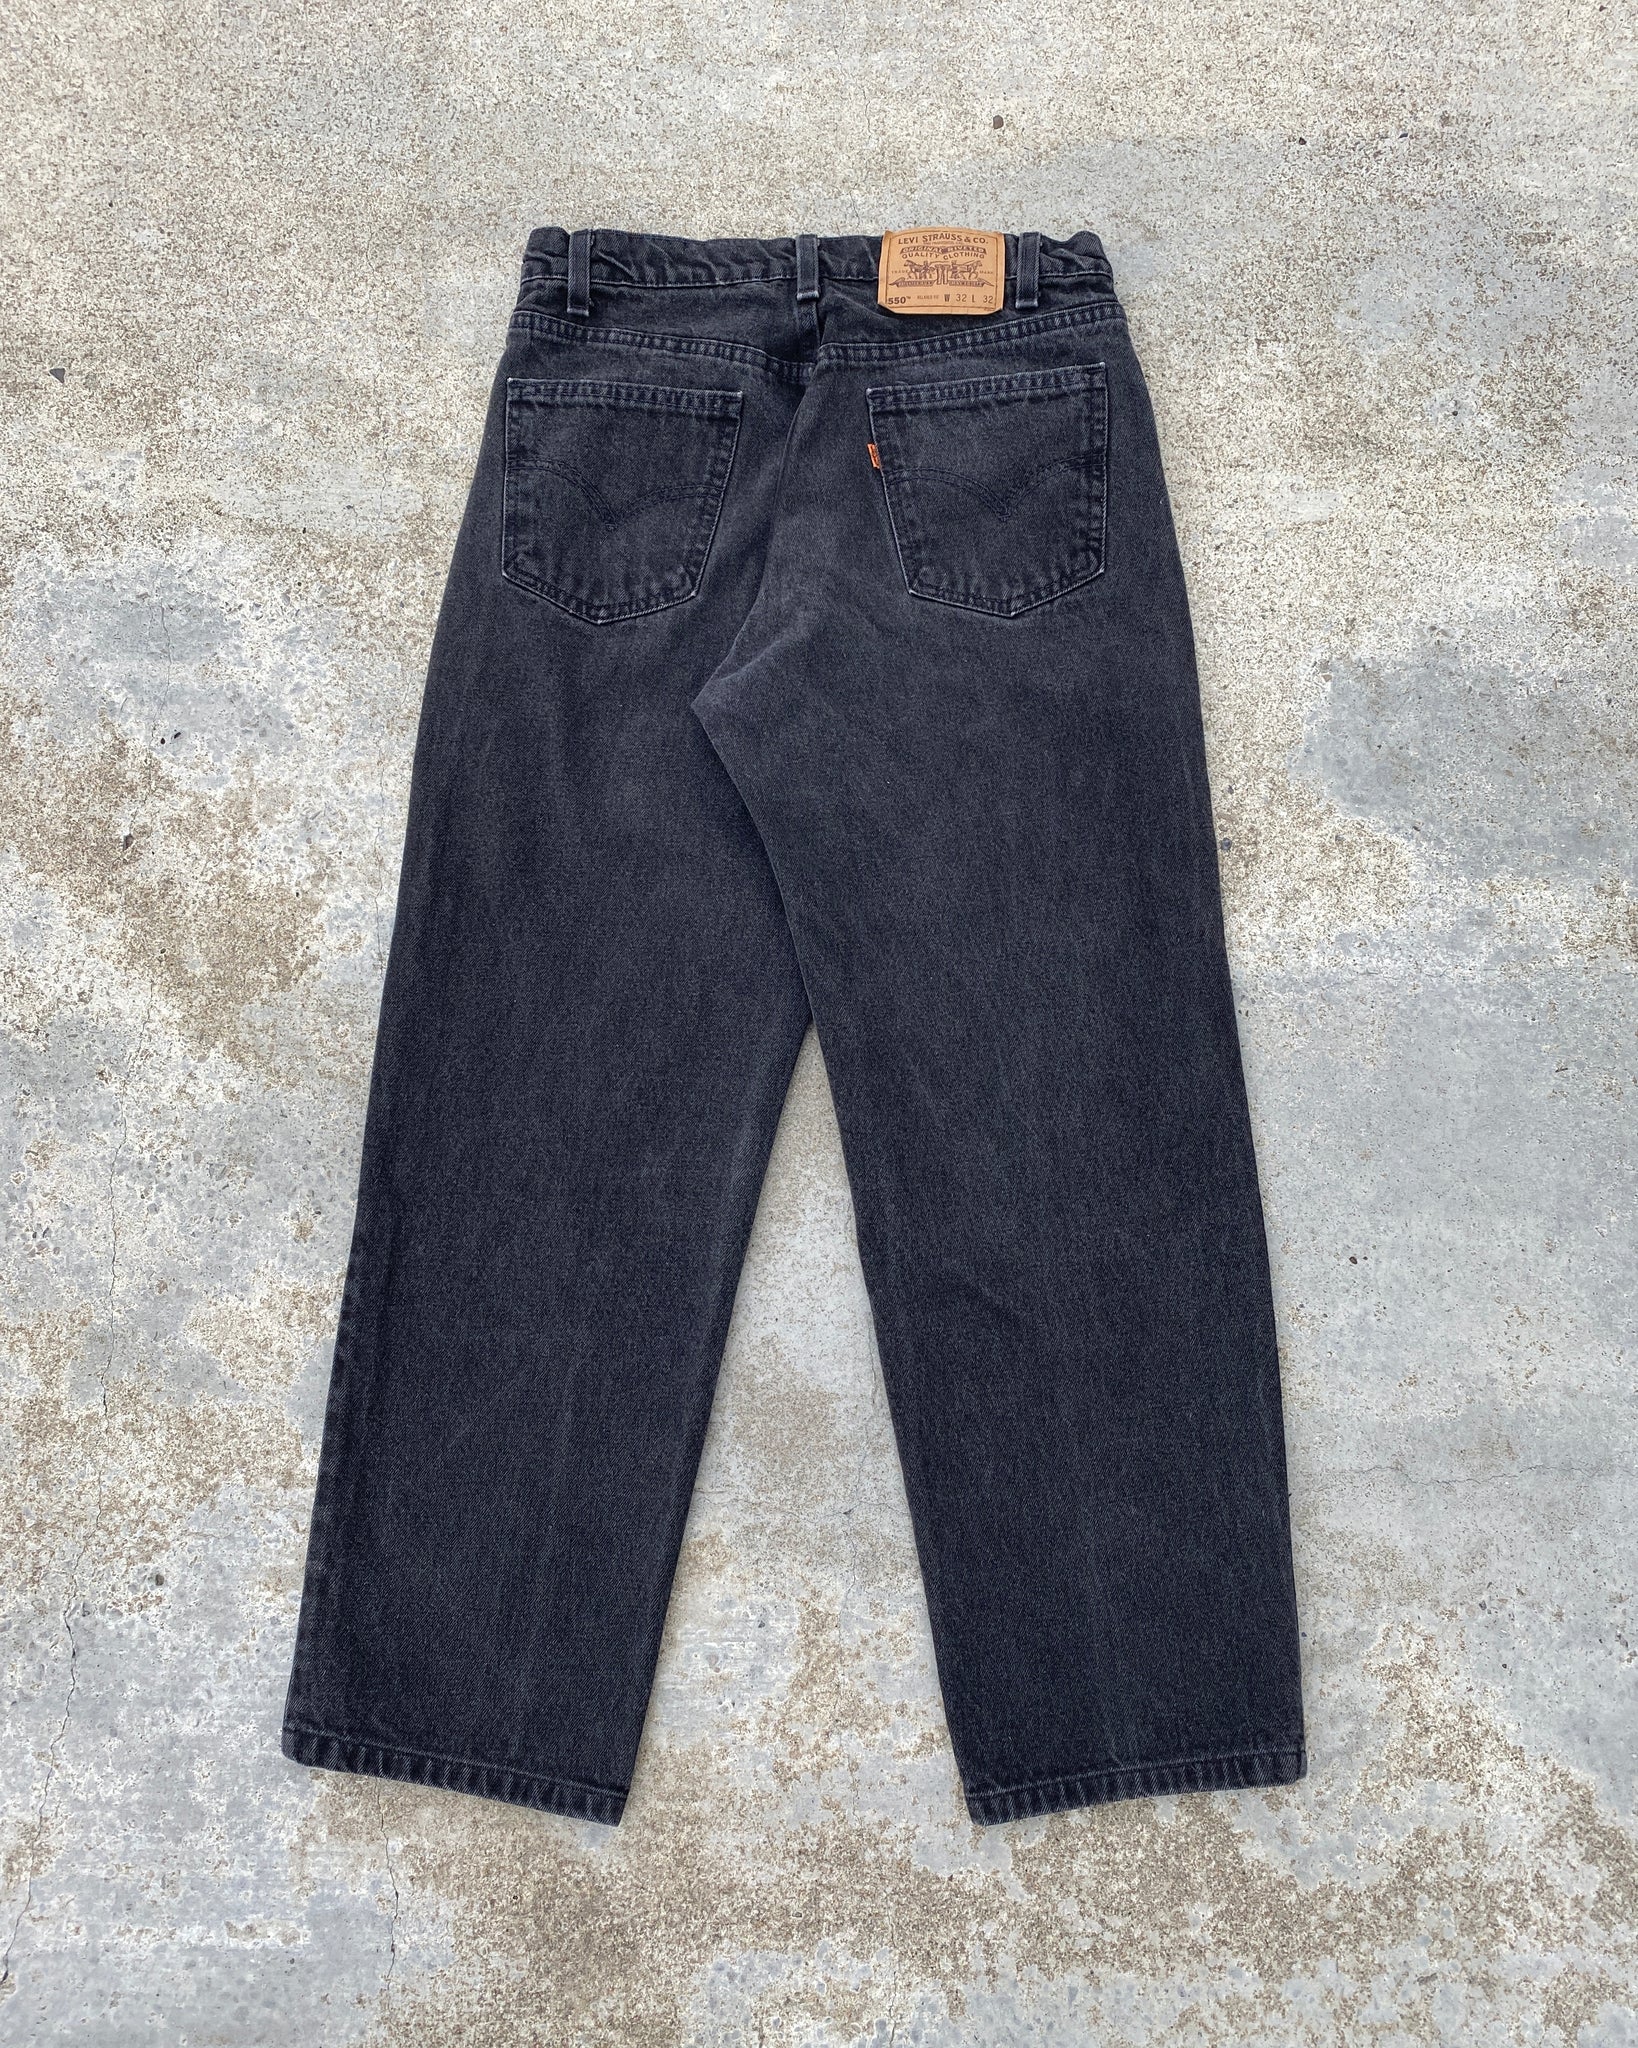 1990s Levi's 550 Orange Tab Black Jeans - Size 31 x 29 – TIRED LAUNDRY